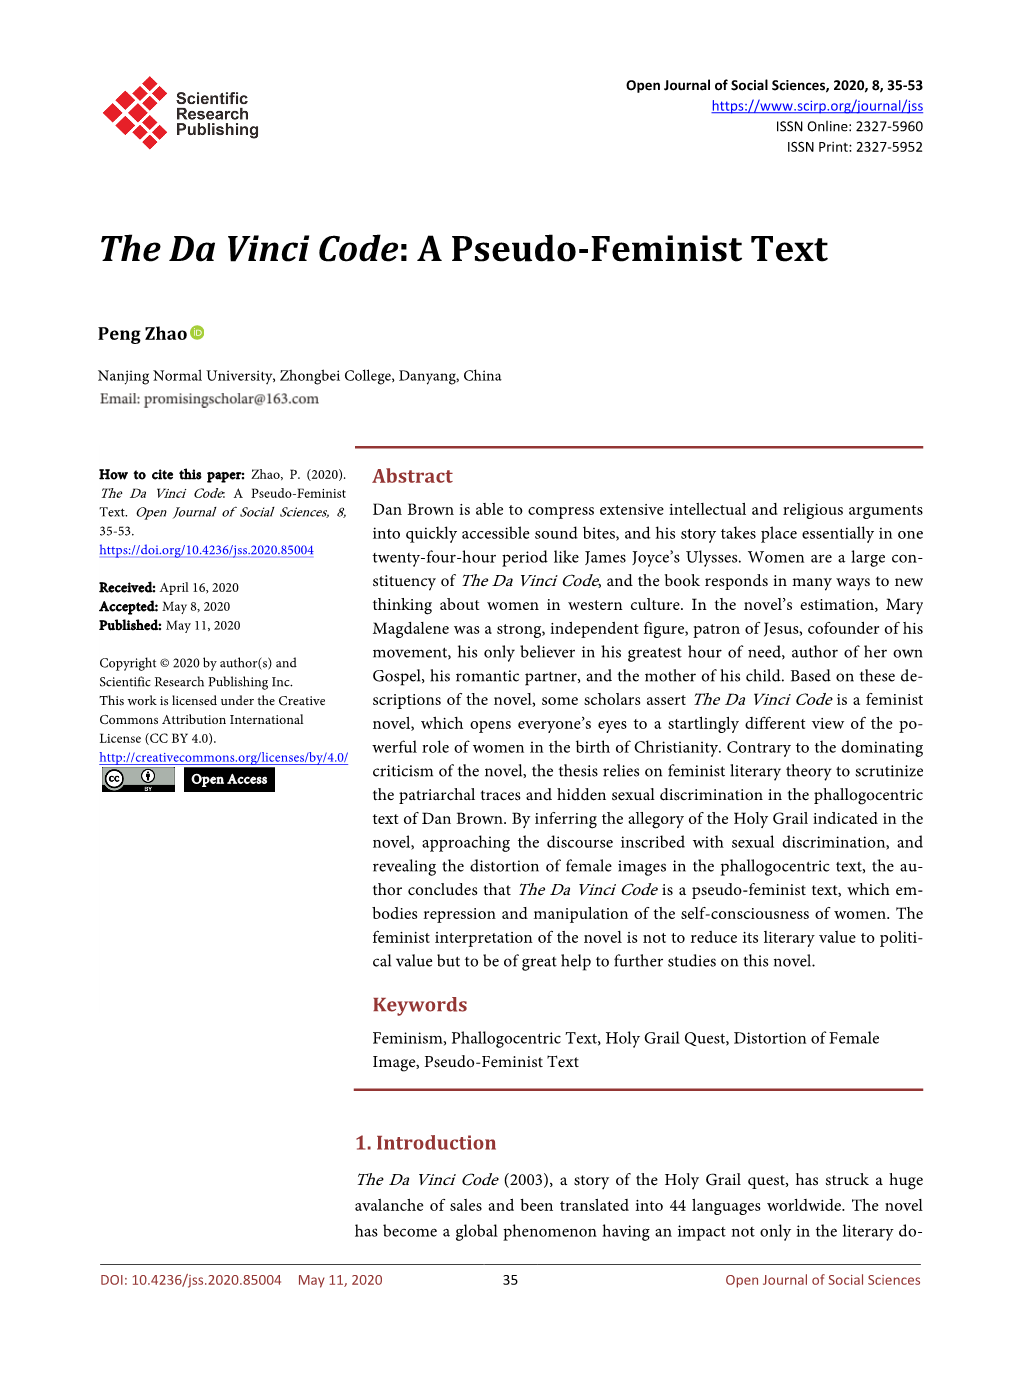 The Da Vinci Code: a Pseudo-Feminist Text